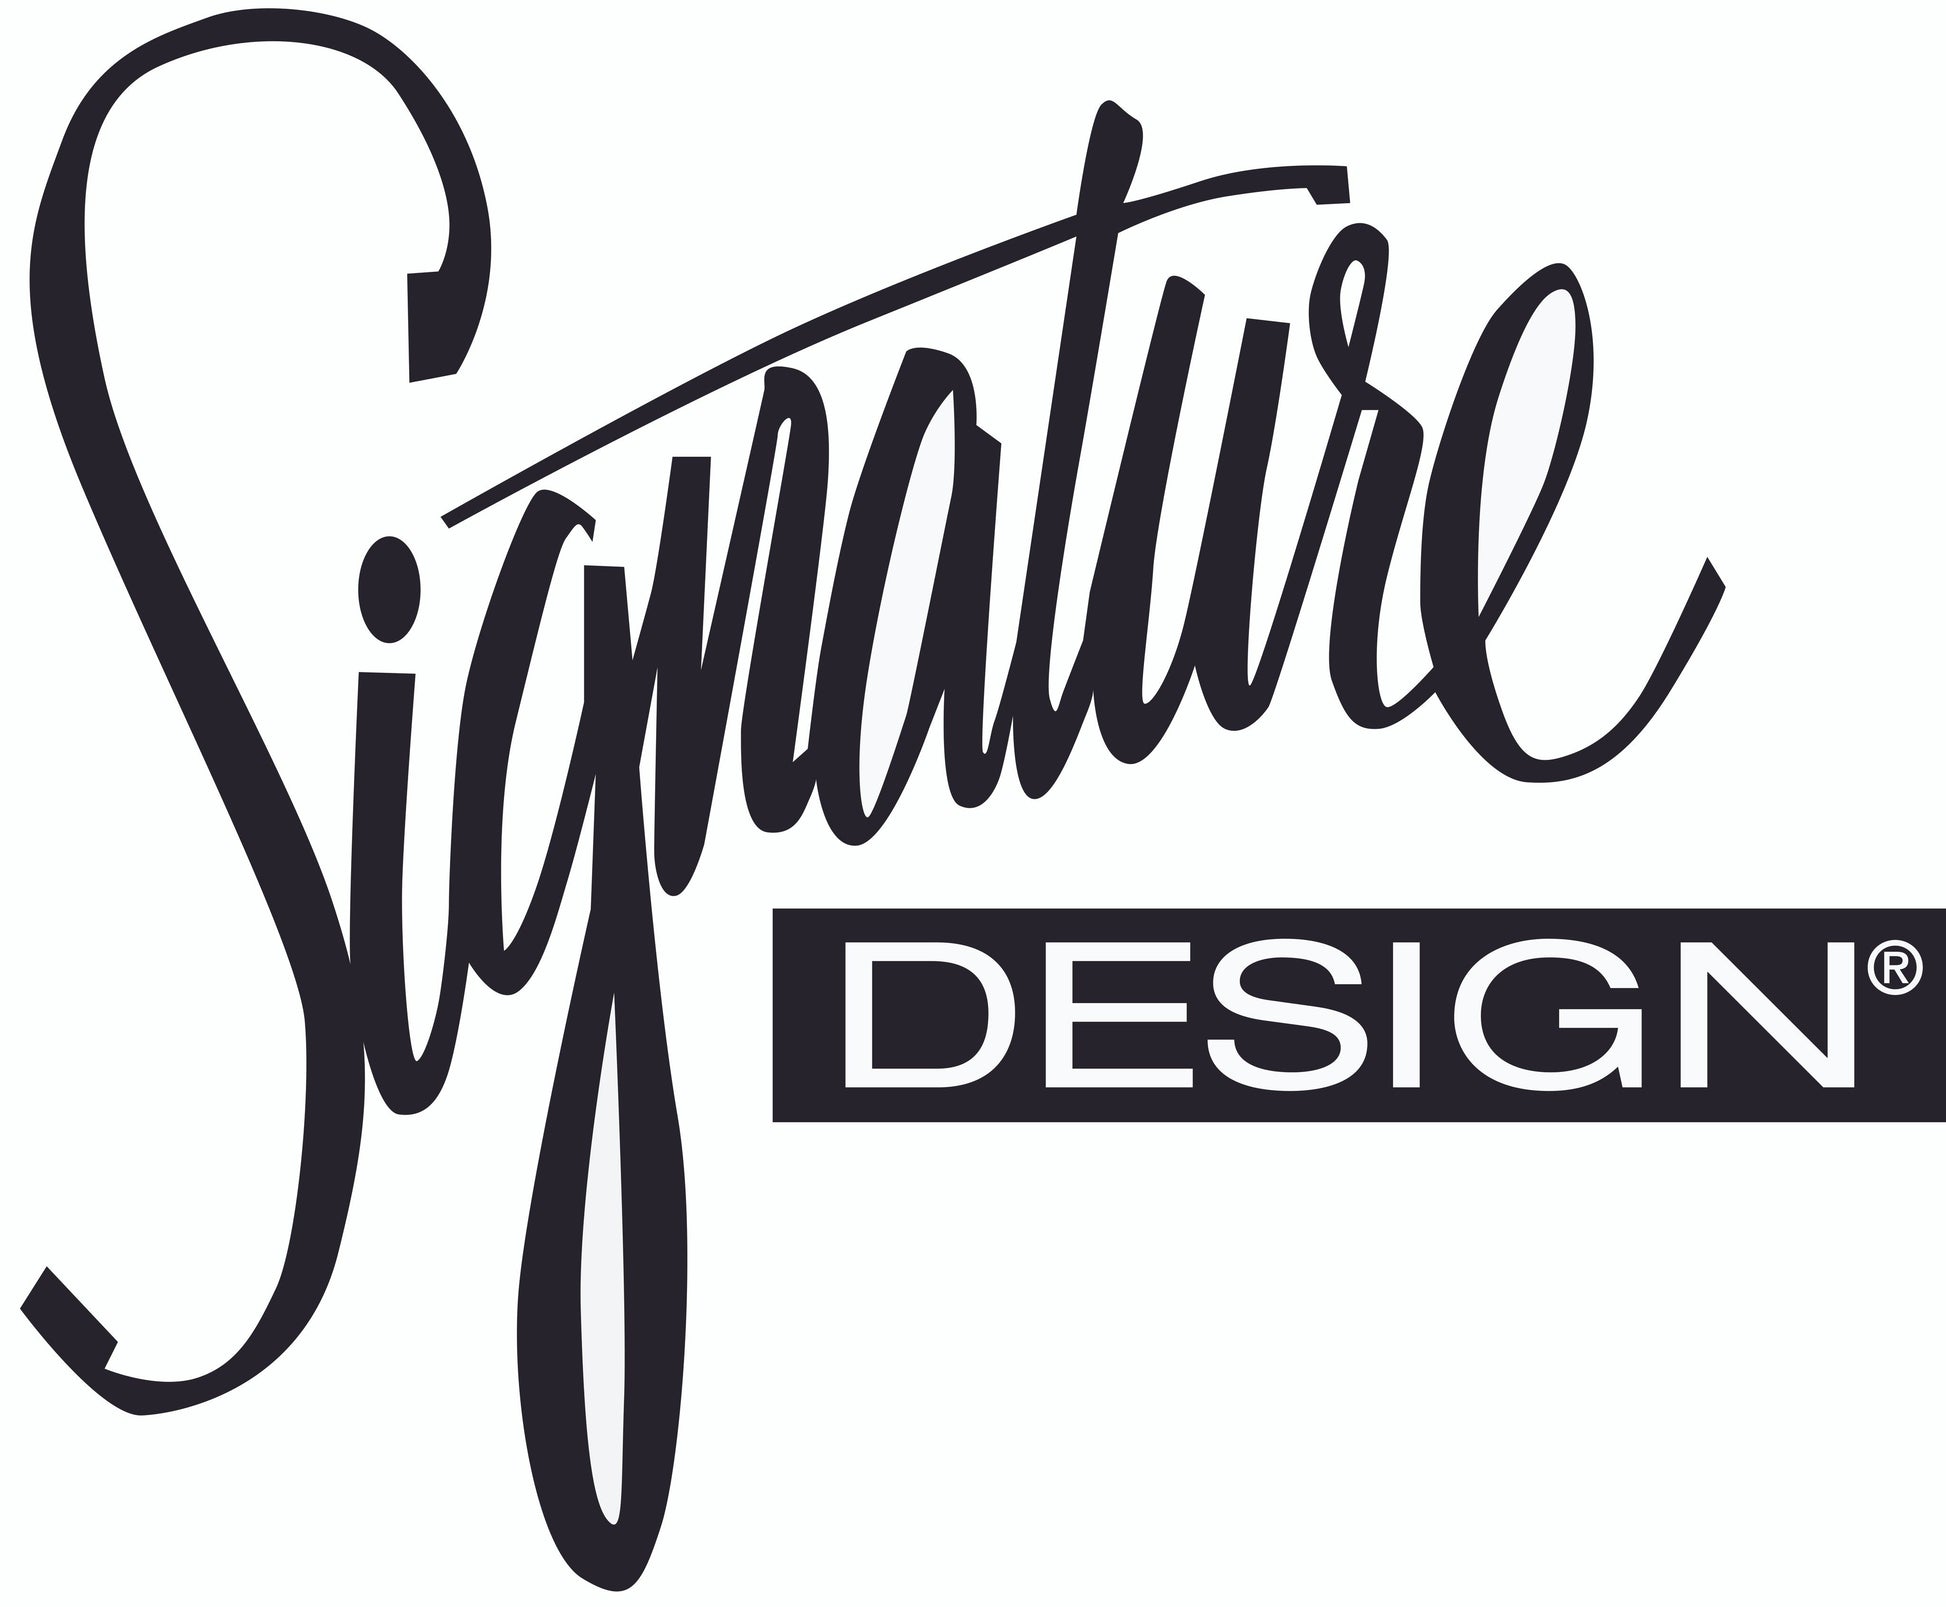 Dressonni Bar Cabinet Signature Design by Ashley®